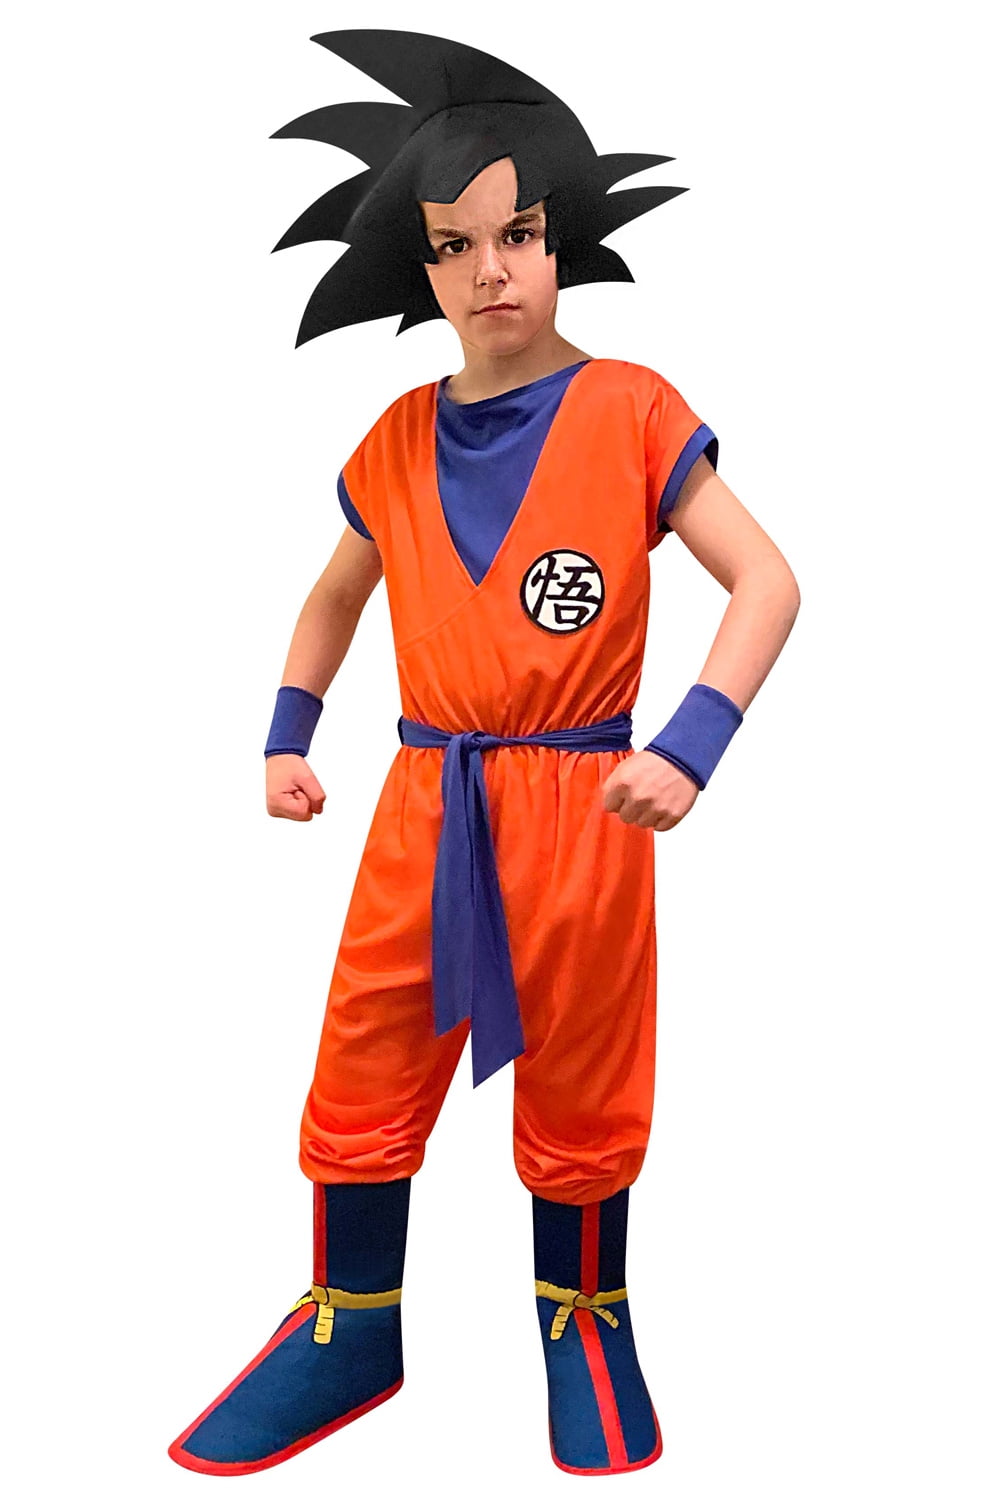 Boys Kids Children Costume Set Halloween Party Dress Up Outfit Fancy Goku